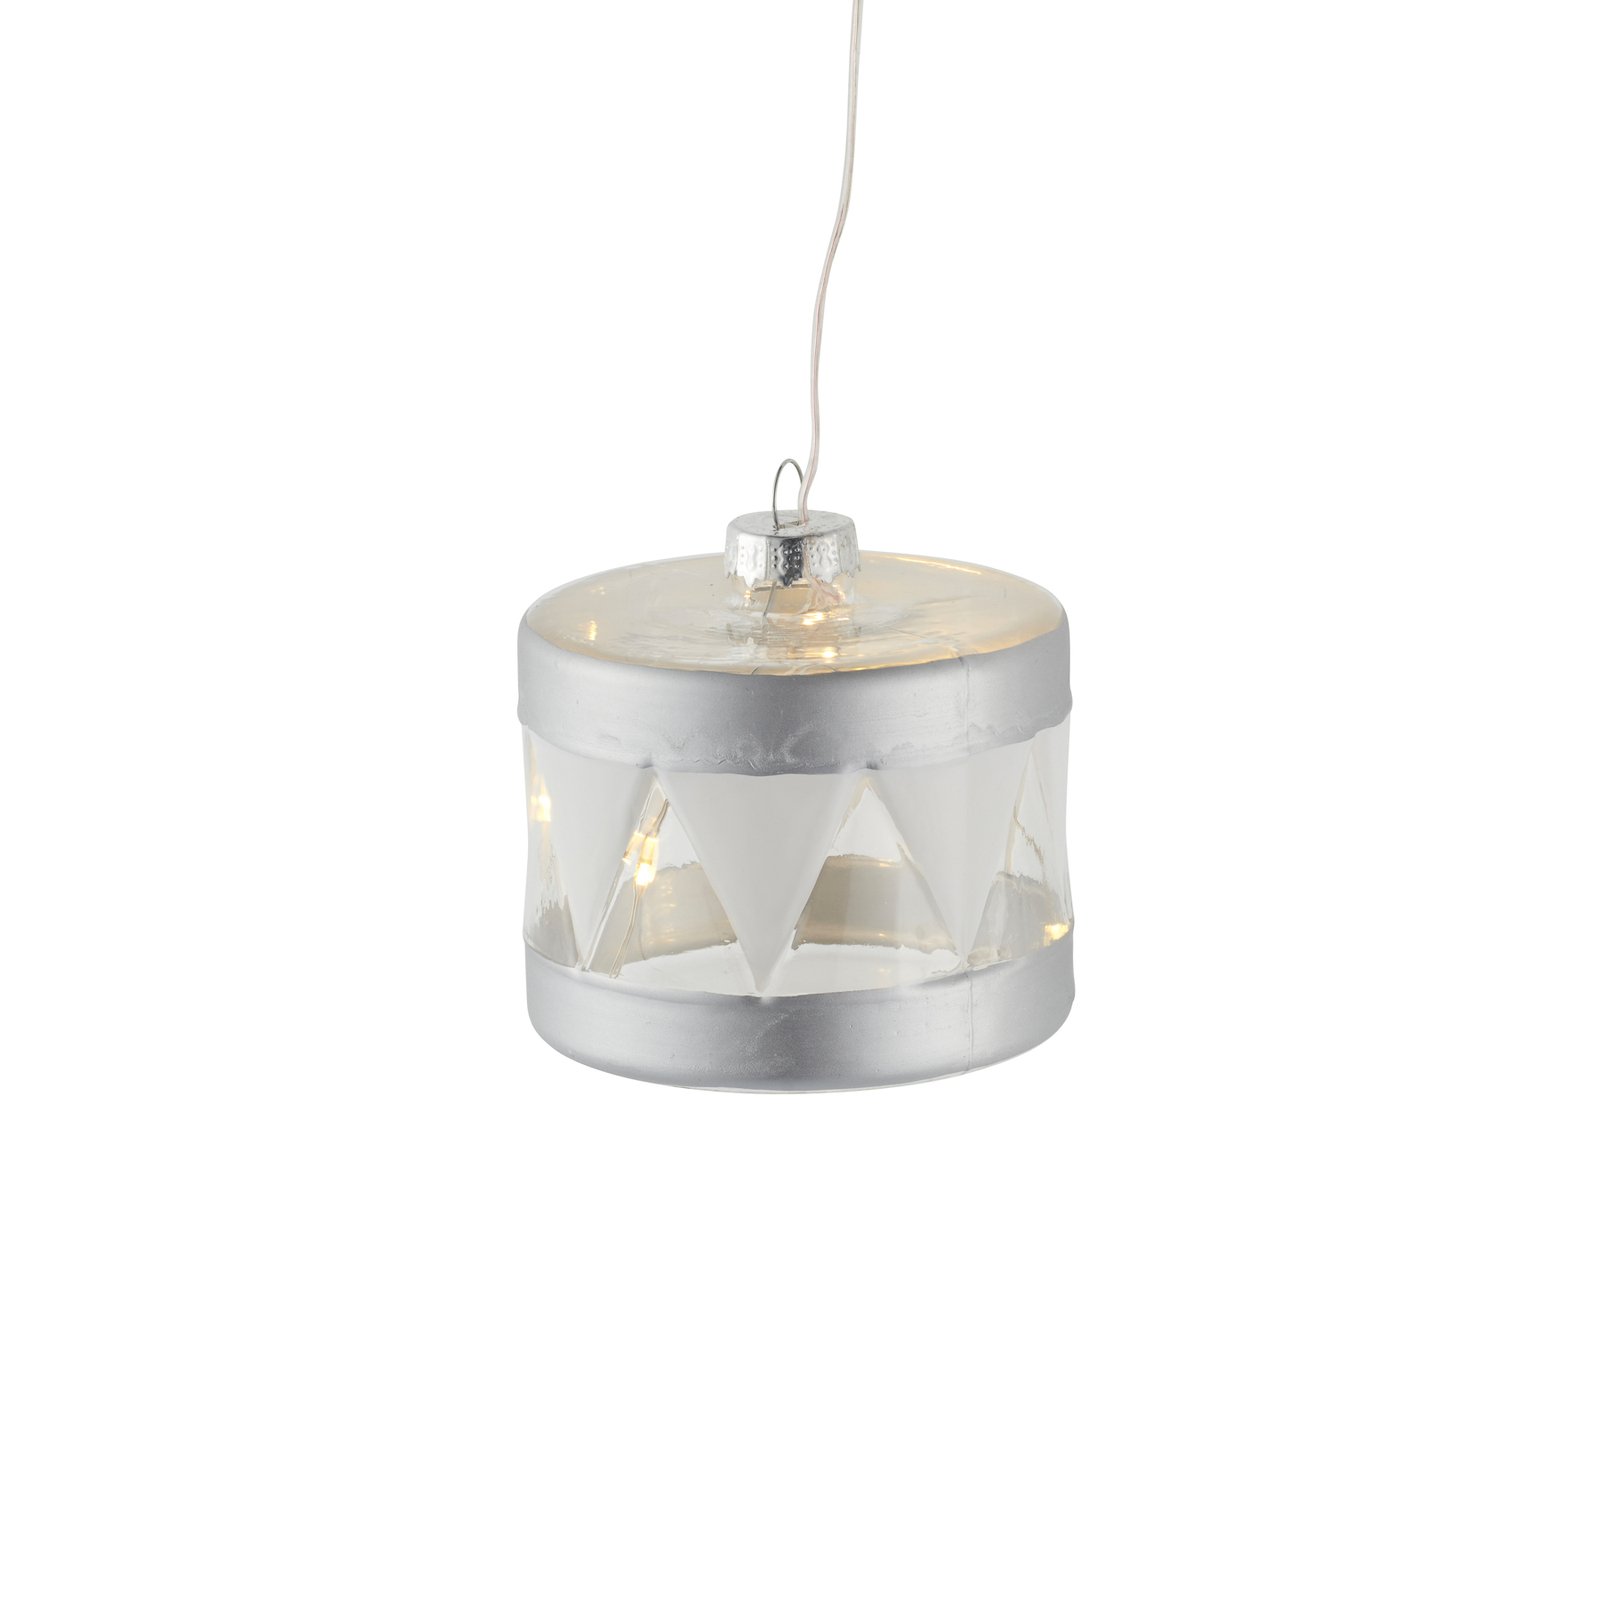 Koristeellinen riipus Elly LED-valolla, Ø 7 cm, hopea